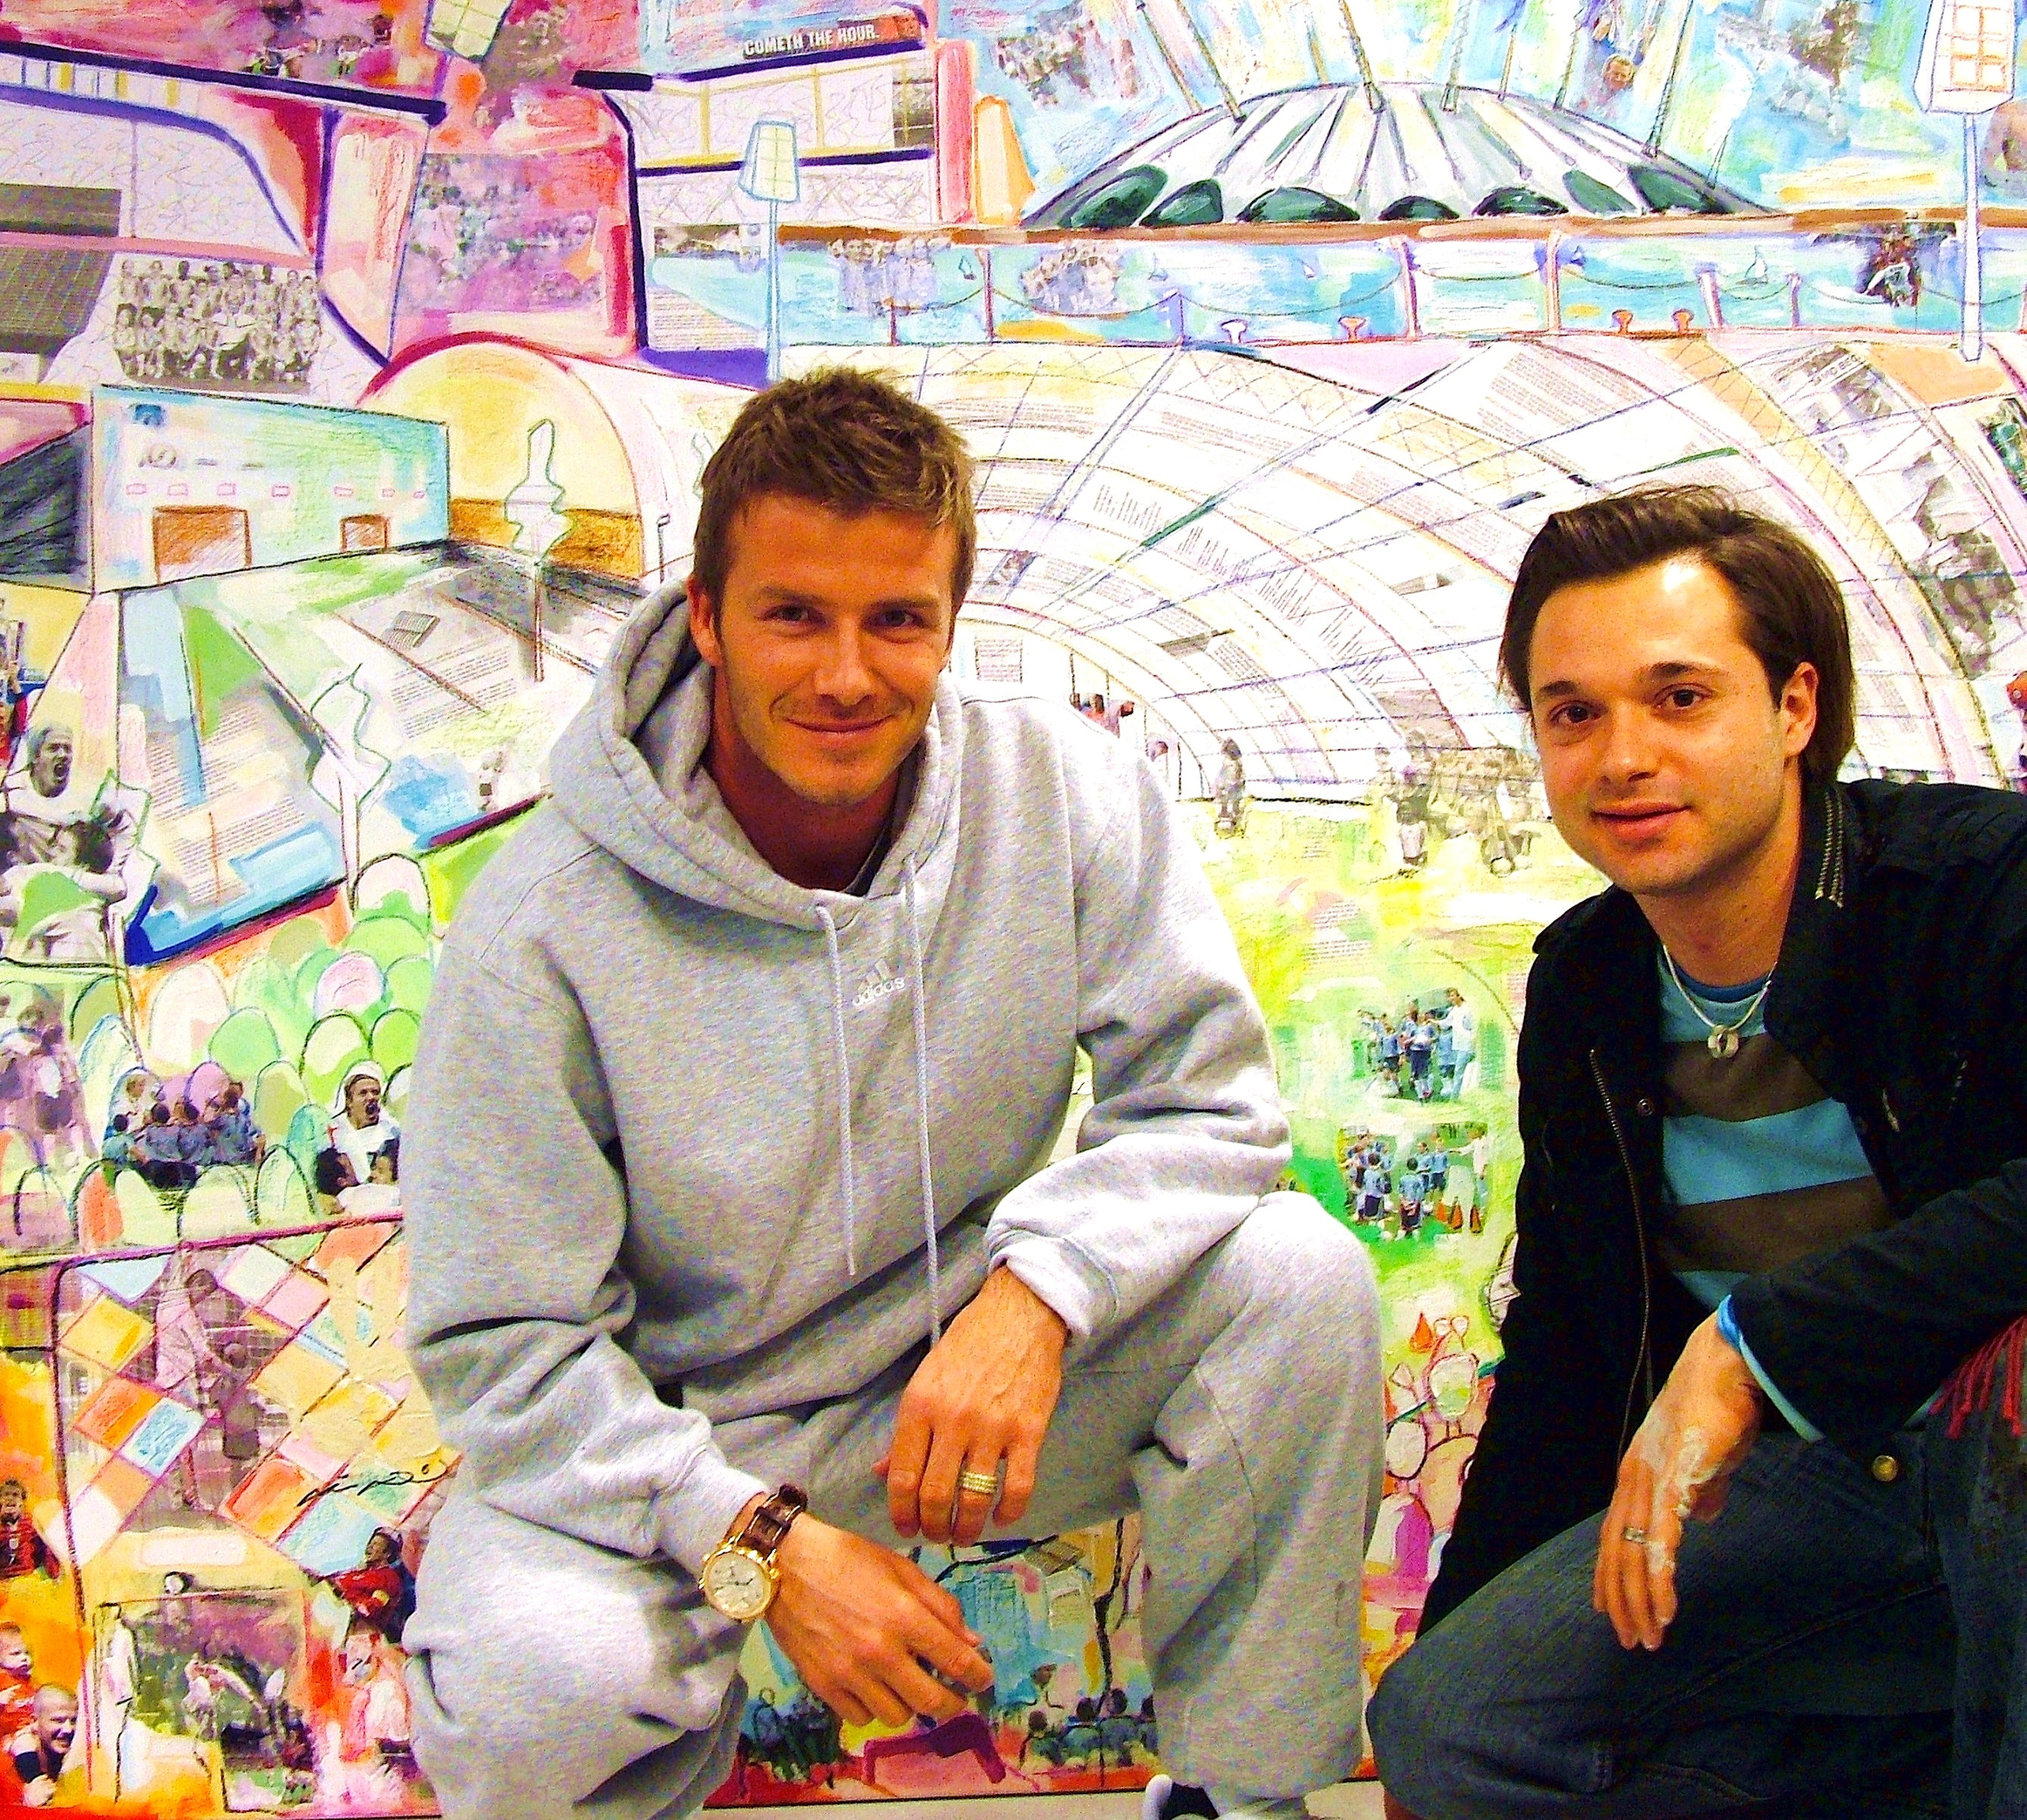 Soccer star David Beckham in an earlier collaboration with Sacha Jafri. The artwork features Beckham’s footprint.